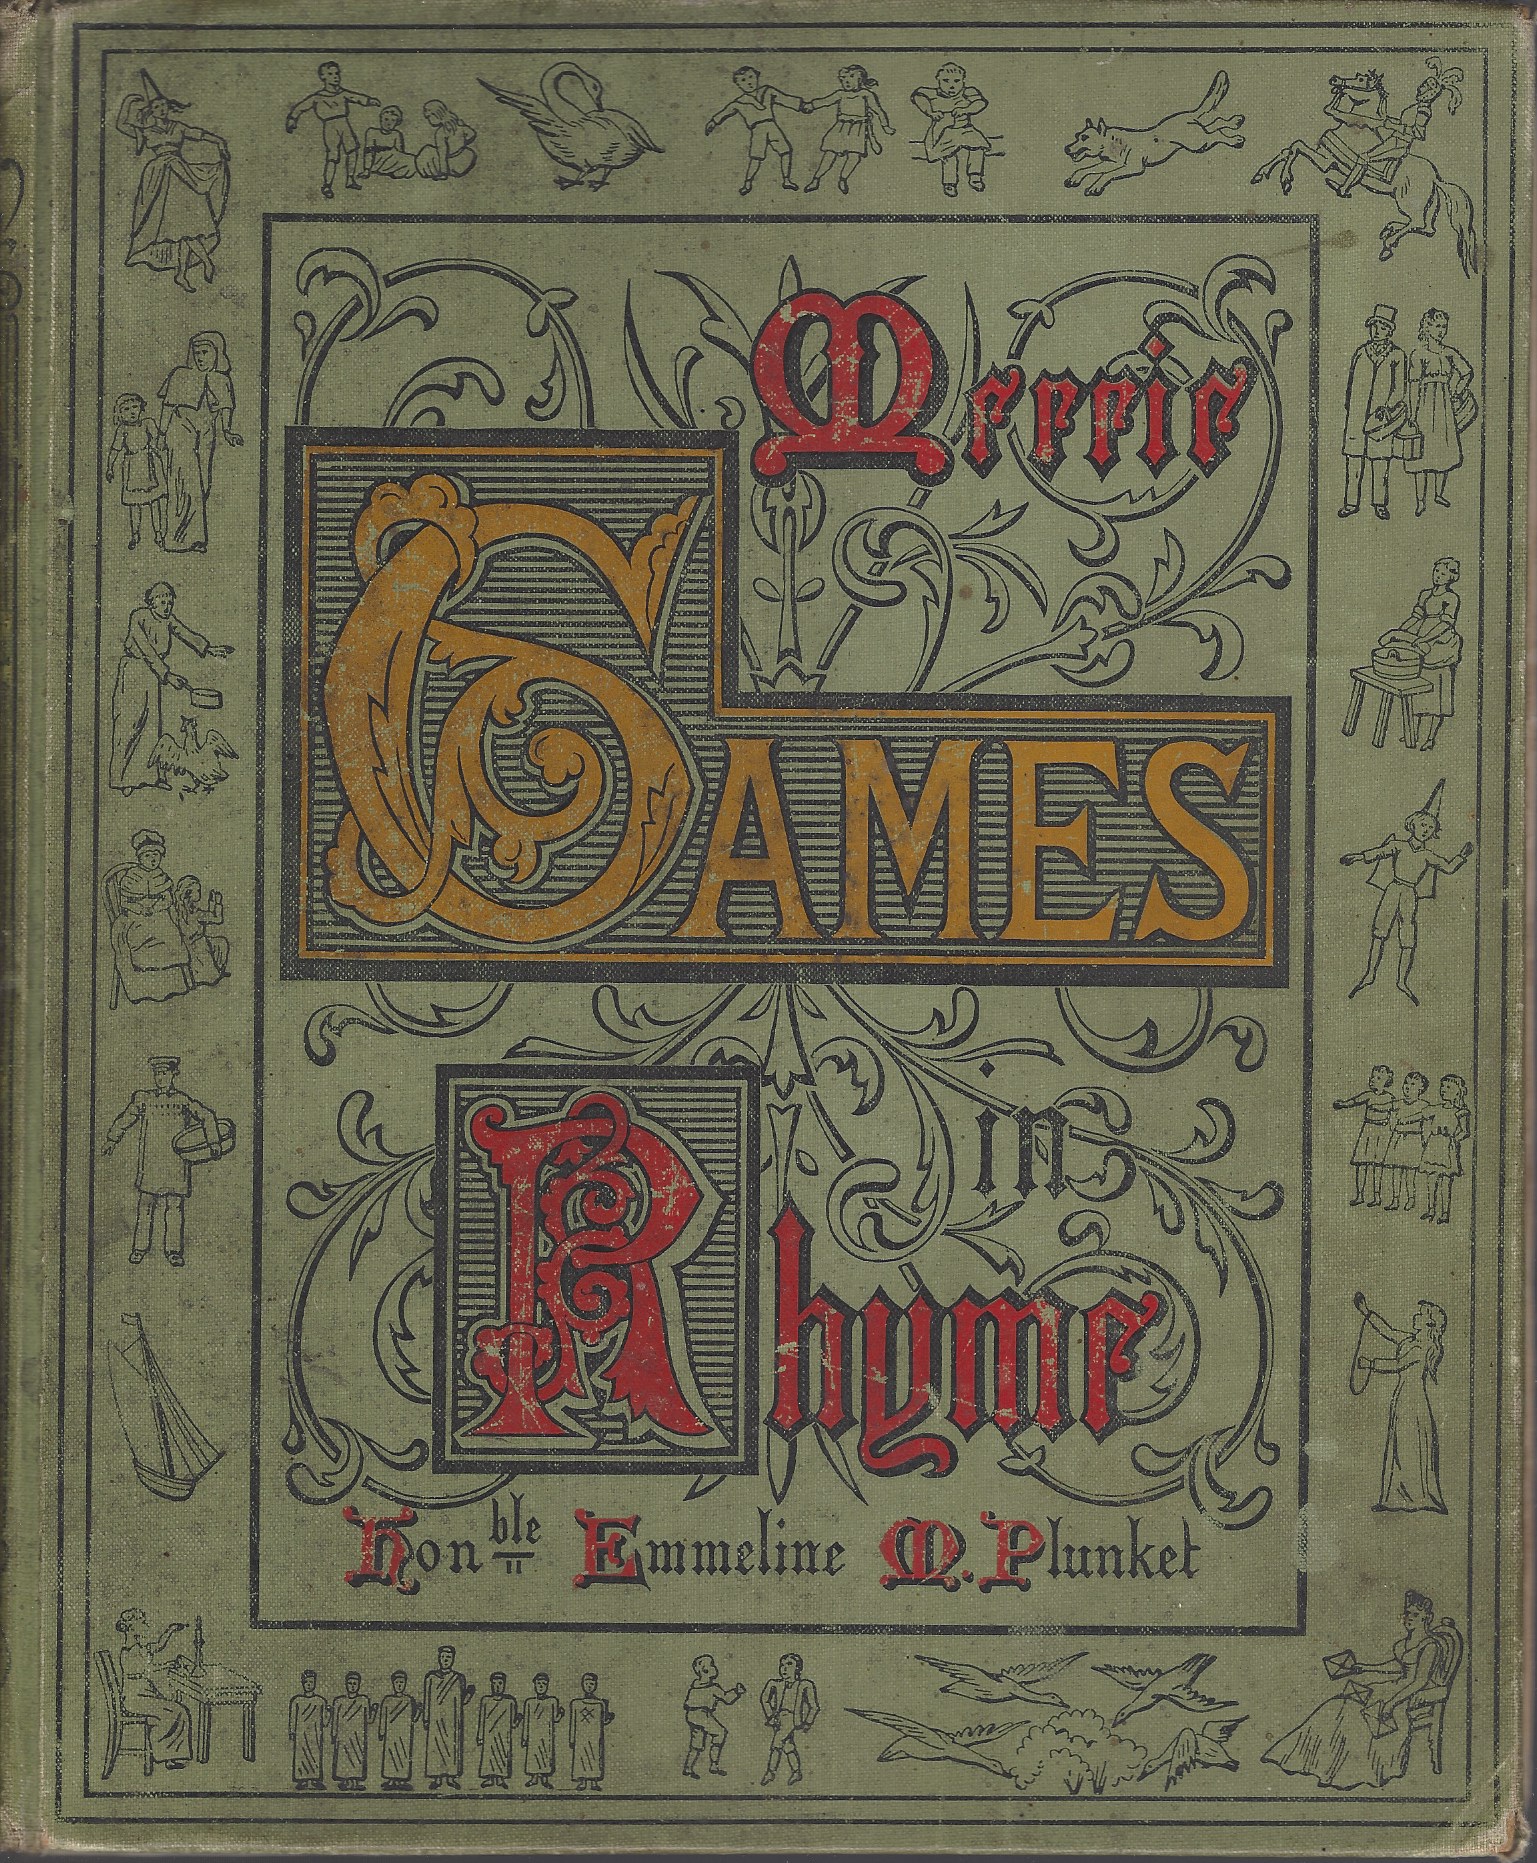 PLUNKET EMMELINE M. HON'BLE - Merrie Games in Rhyme from Ye Olden Time